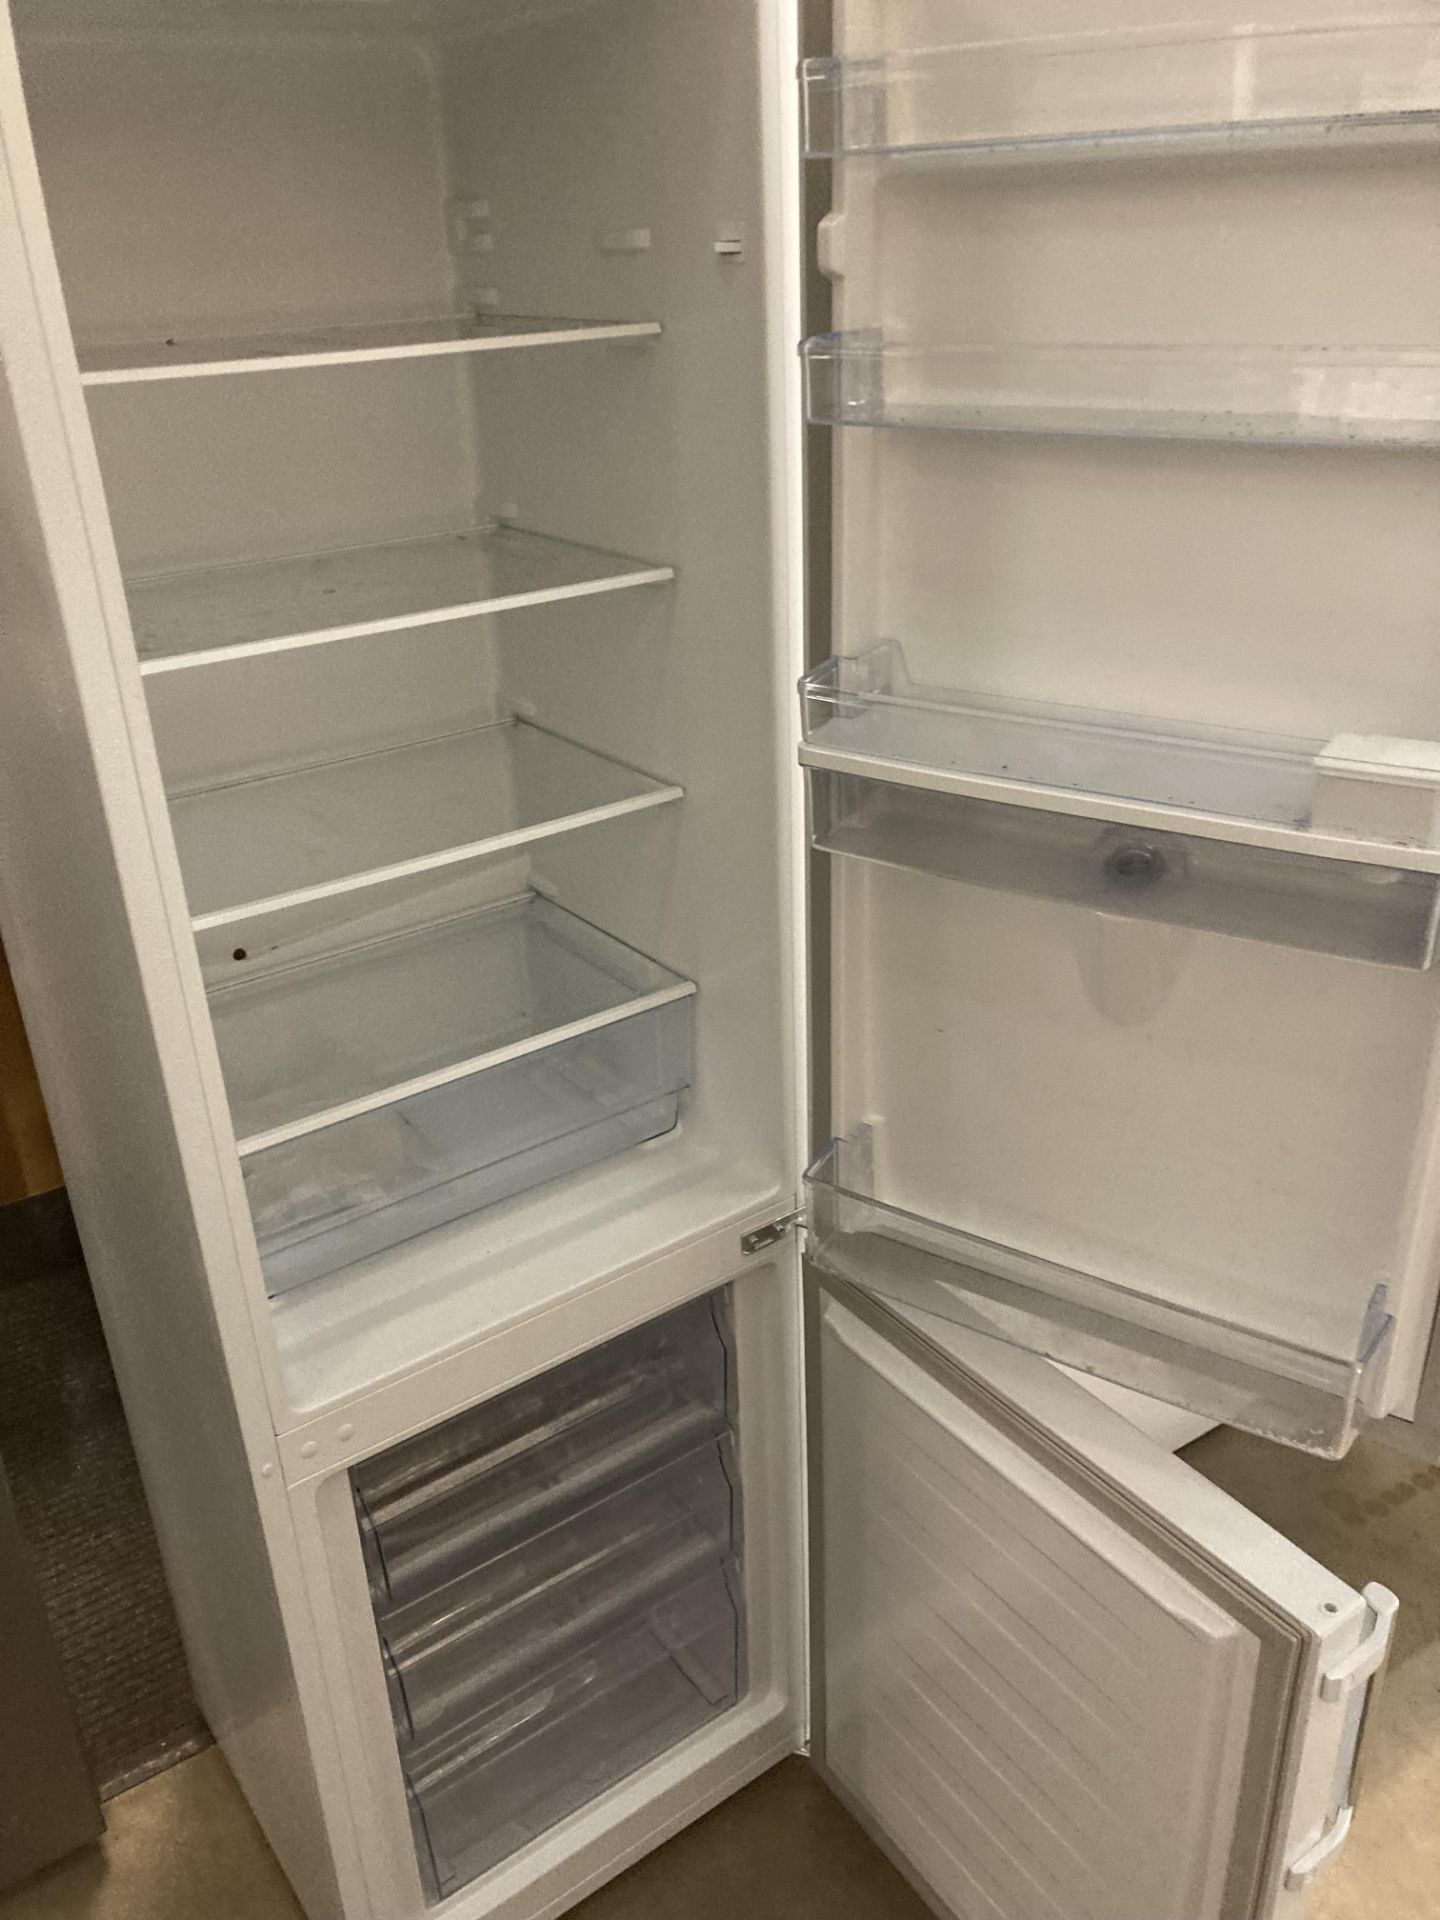 Fridgemaster upright fridge freezer (saleroom location: PO) - Image 2 of 2